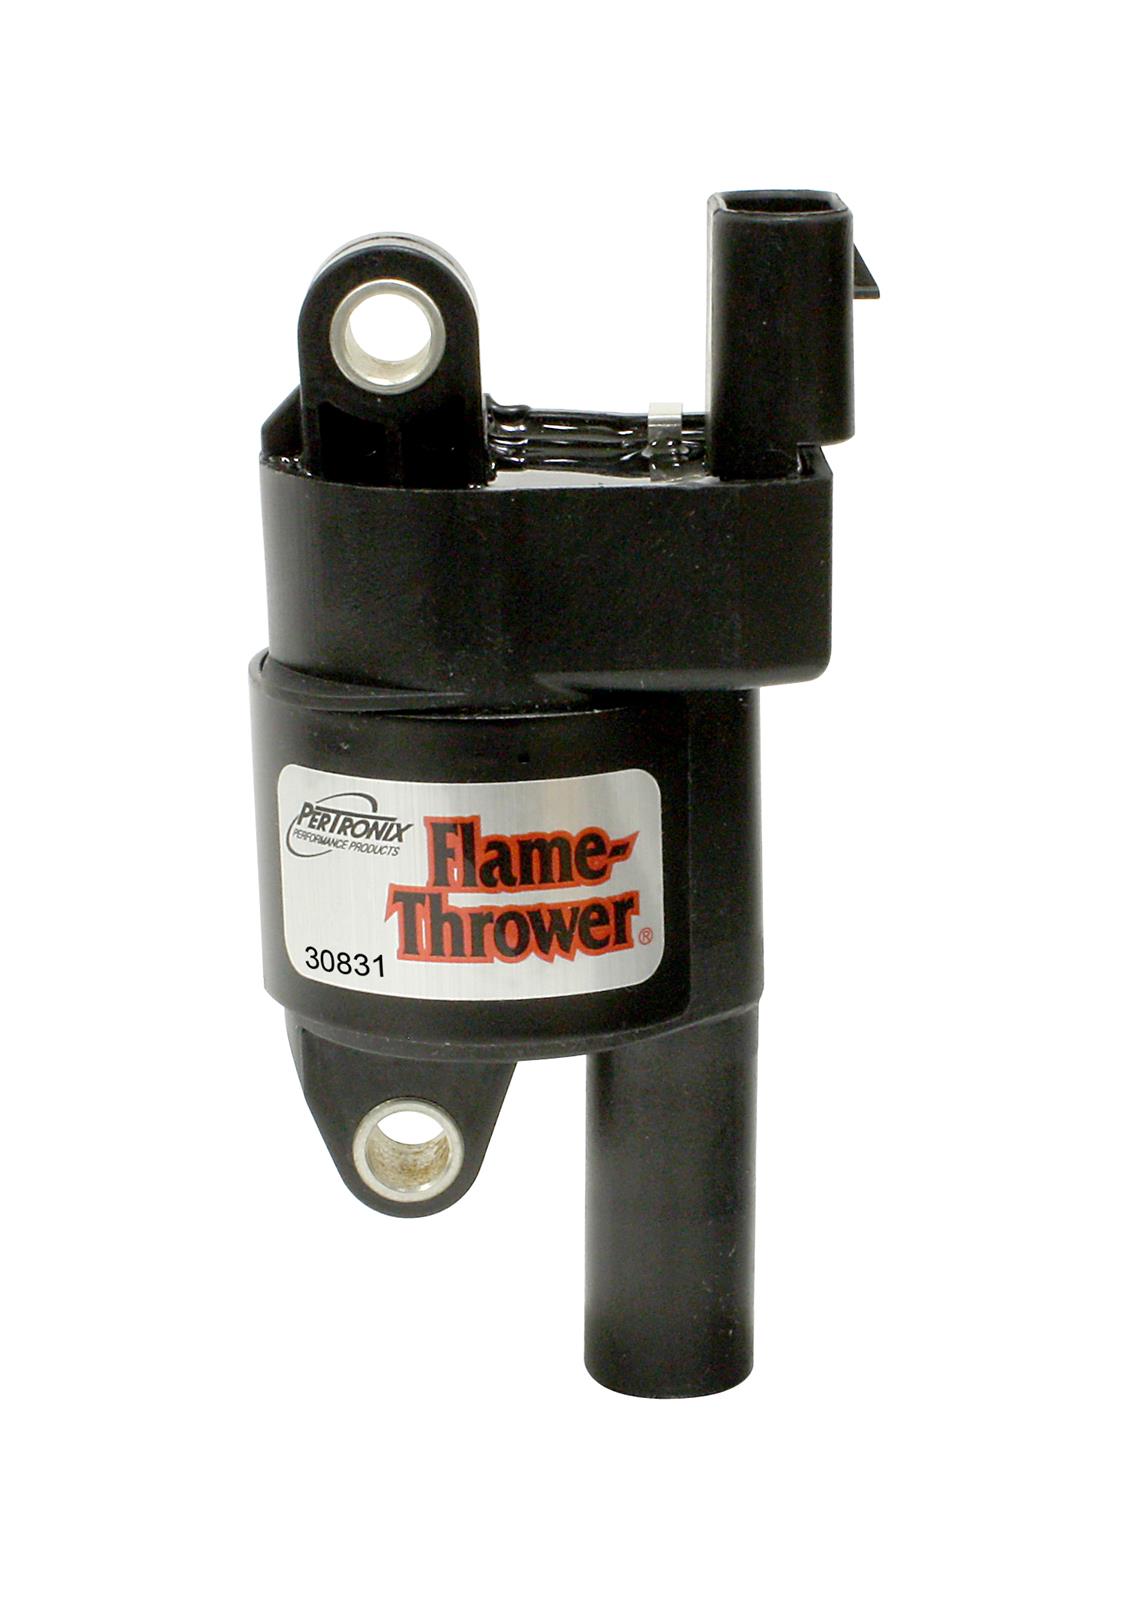 Parts Bin: PerTronix Flame-Thrower Universal MAGX2 Ceramic Boot